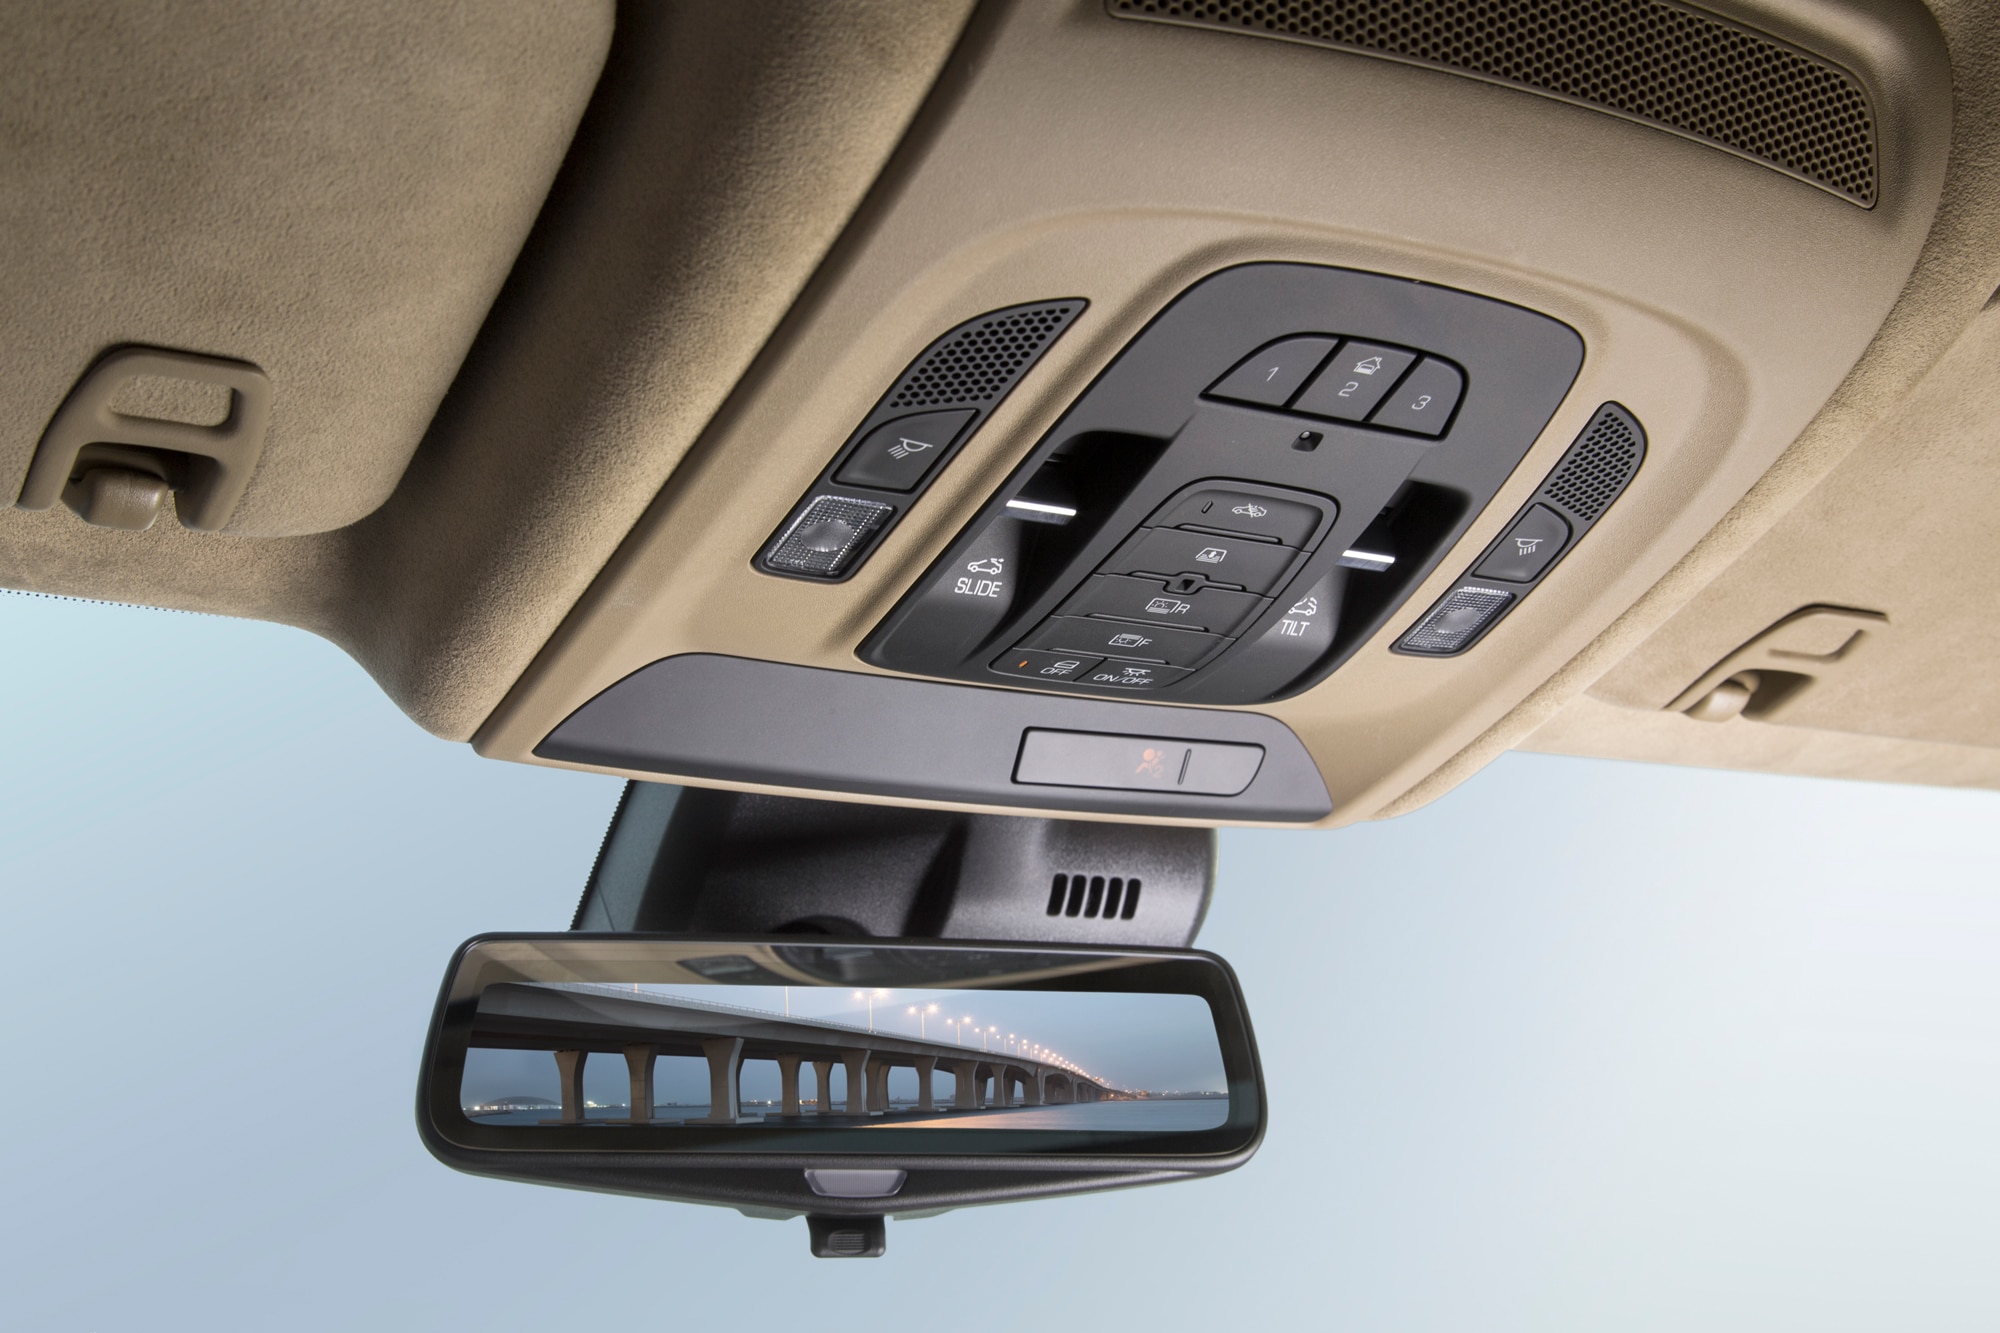 2017 Cadillac CT6 rear camera mirror with brIdge view on cream interior